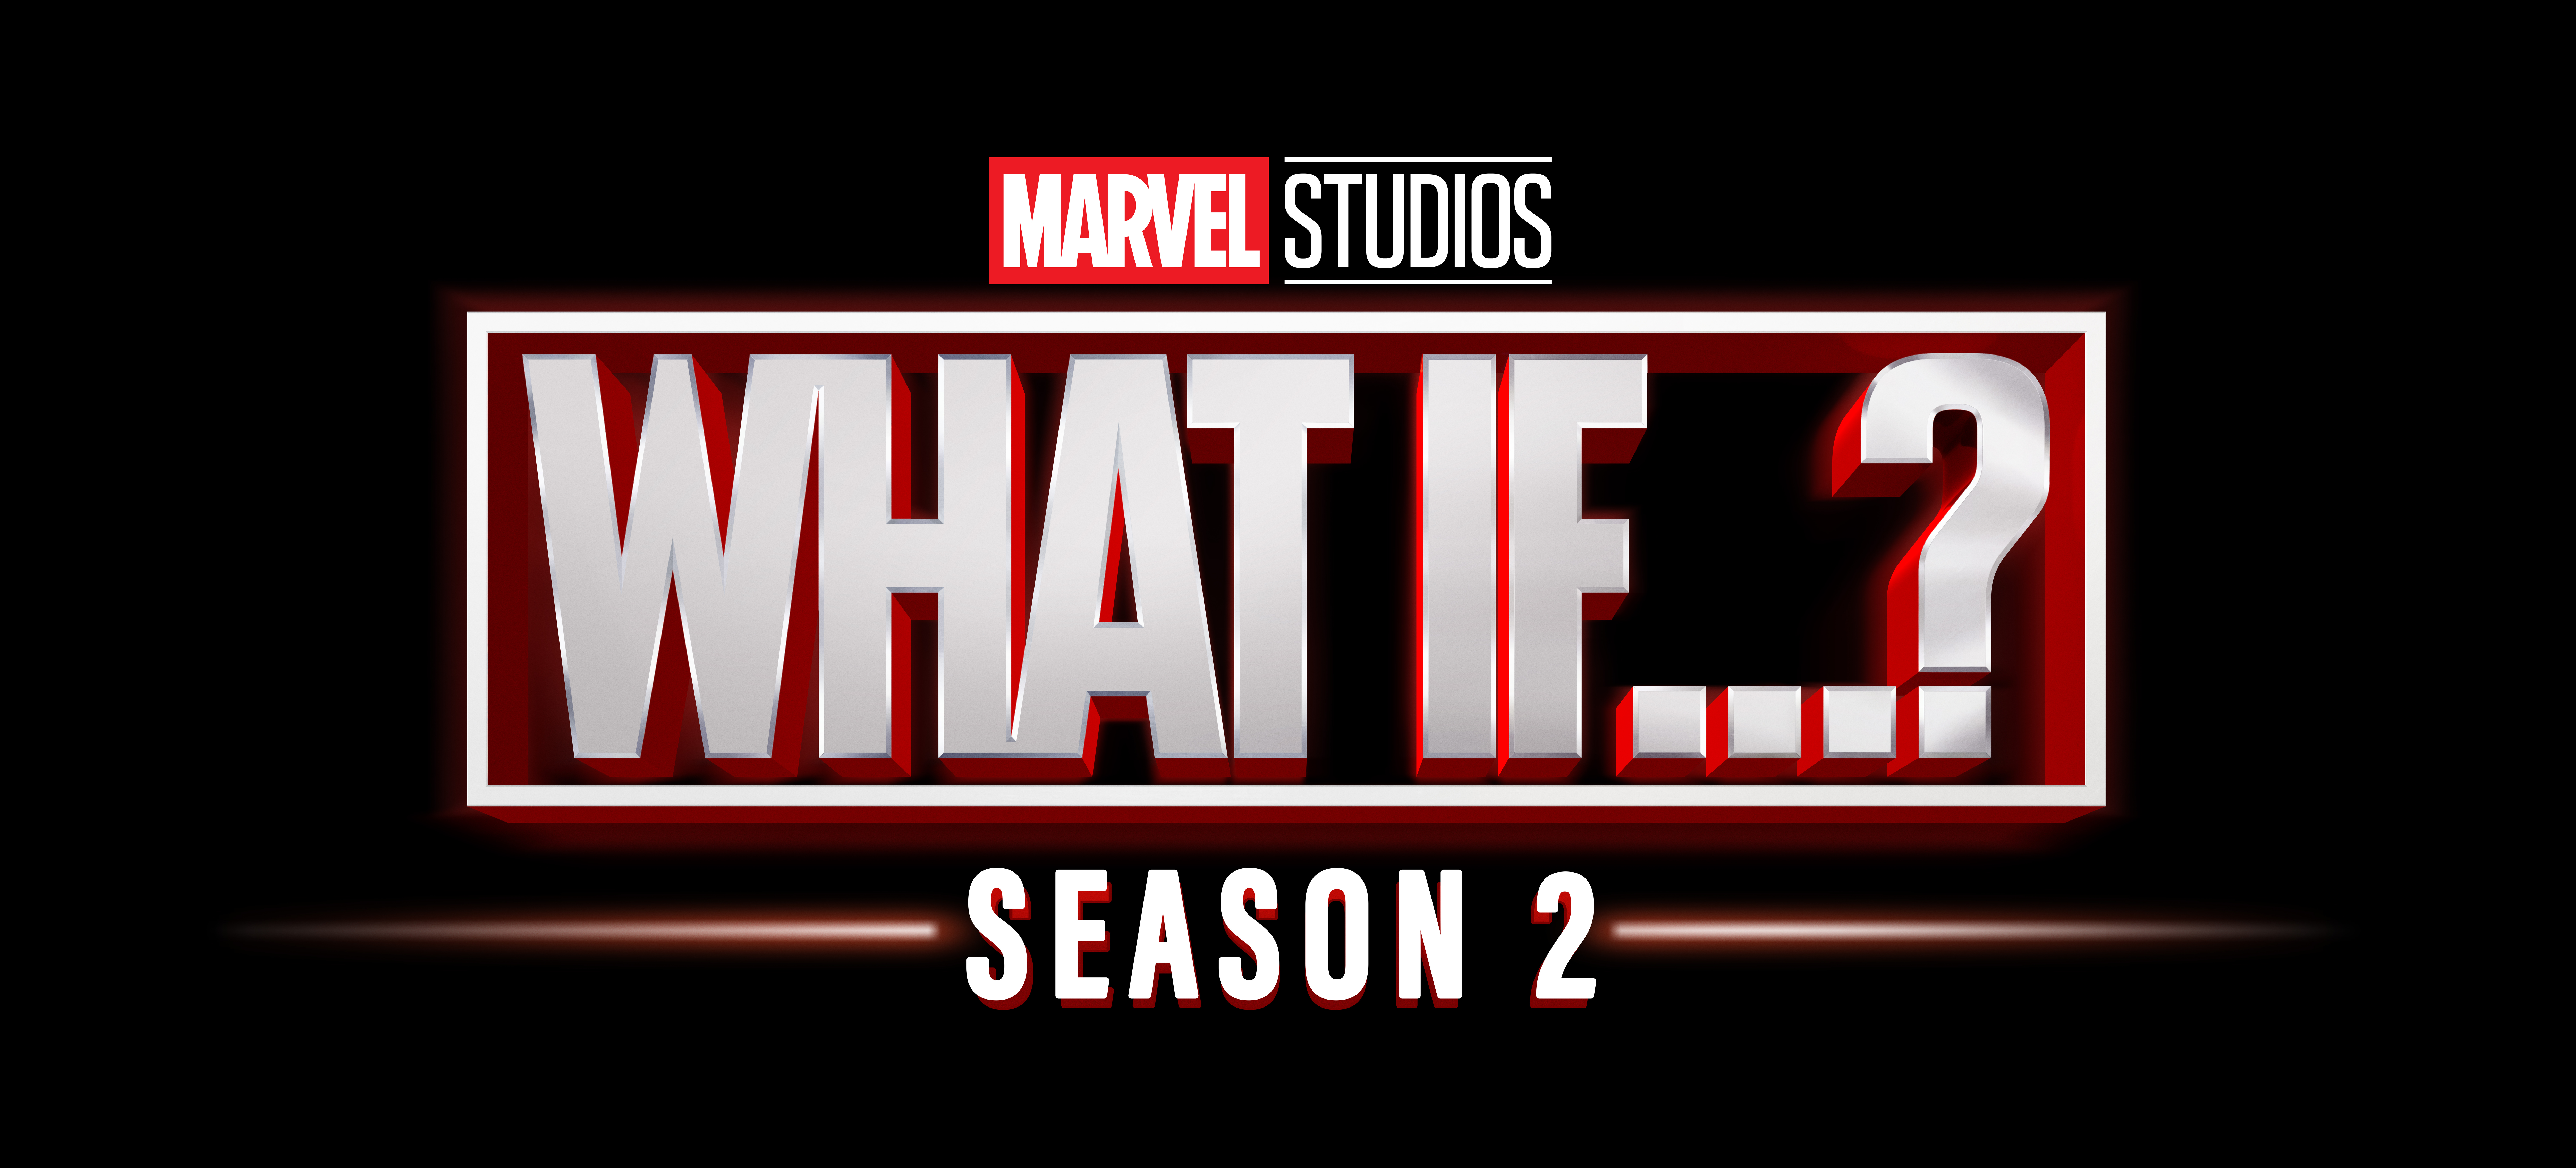 Meet 'Kahhori' a New Mohawk Superhero Created by Marvel for "What If..." Season 2